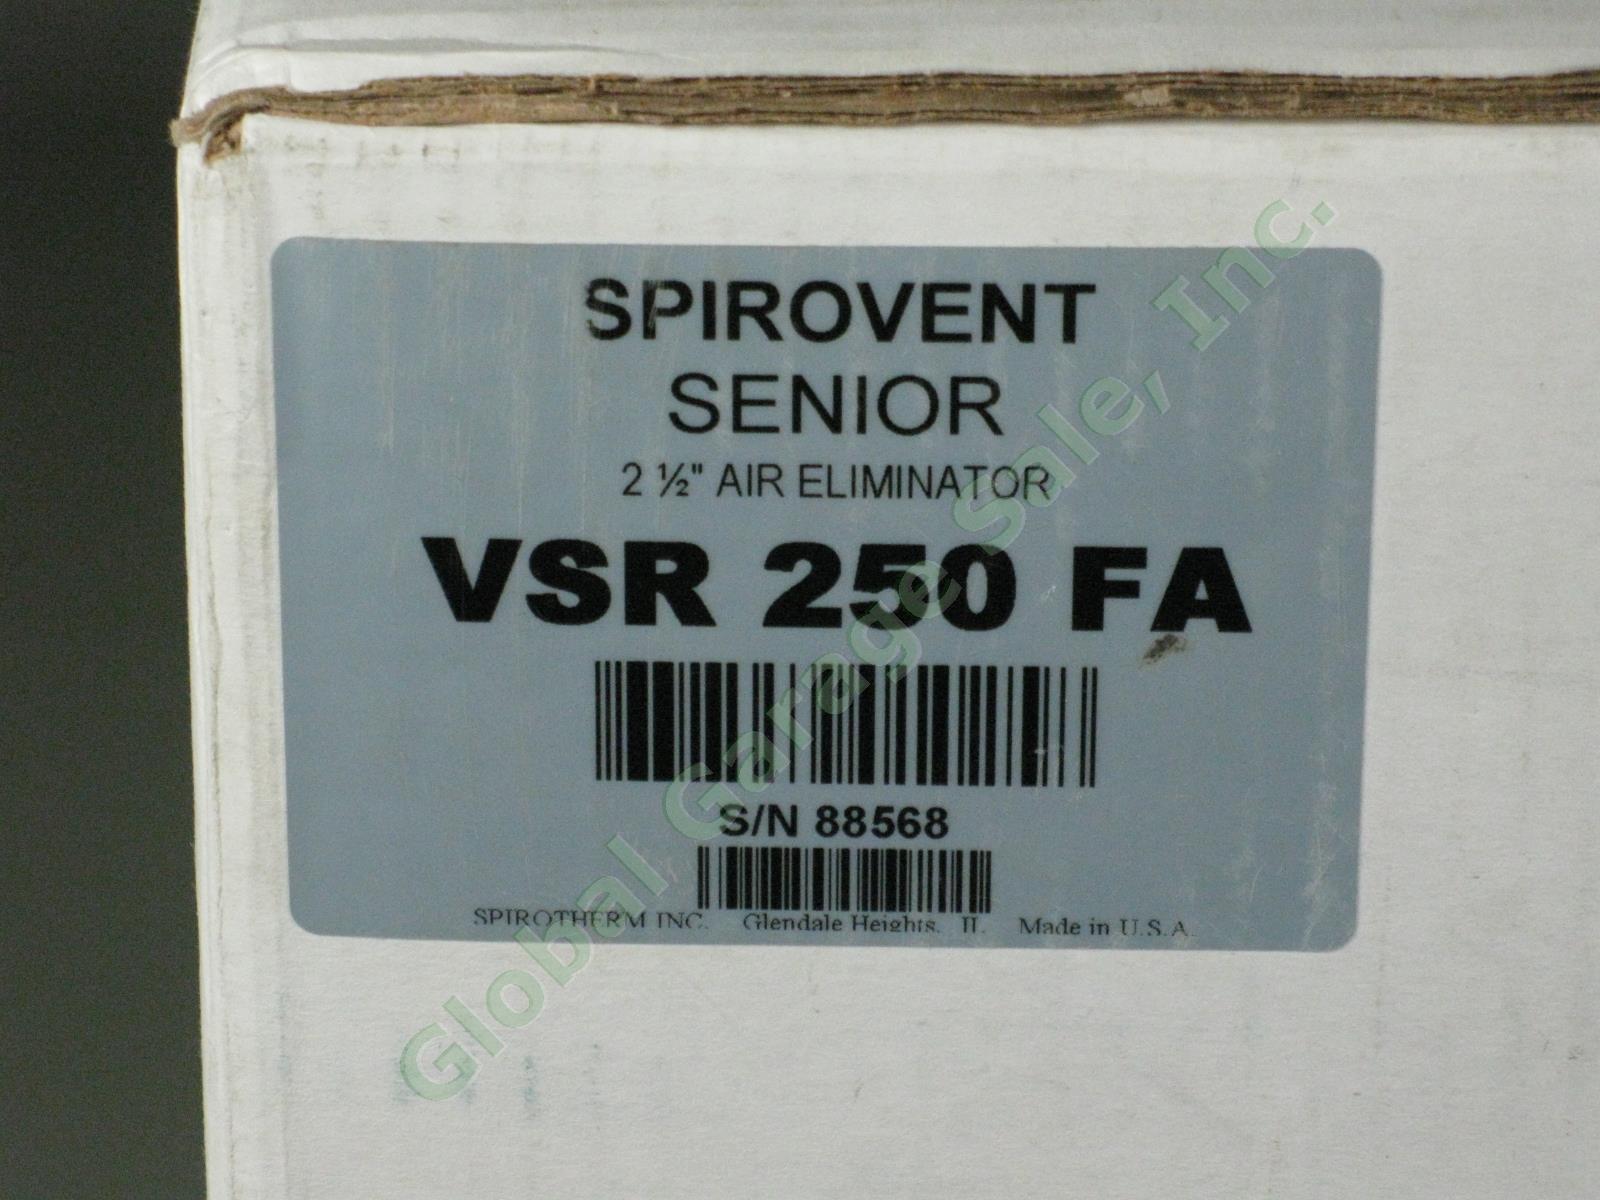 Spirotherm Spirovent Senior Sr VSR250FA 2-1/2" Commercial Air Eliminator Flanged 1